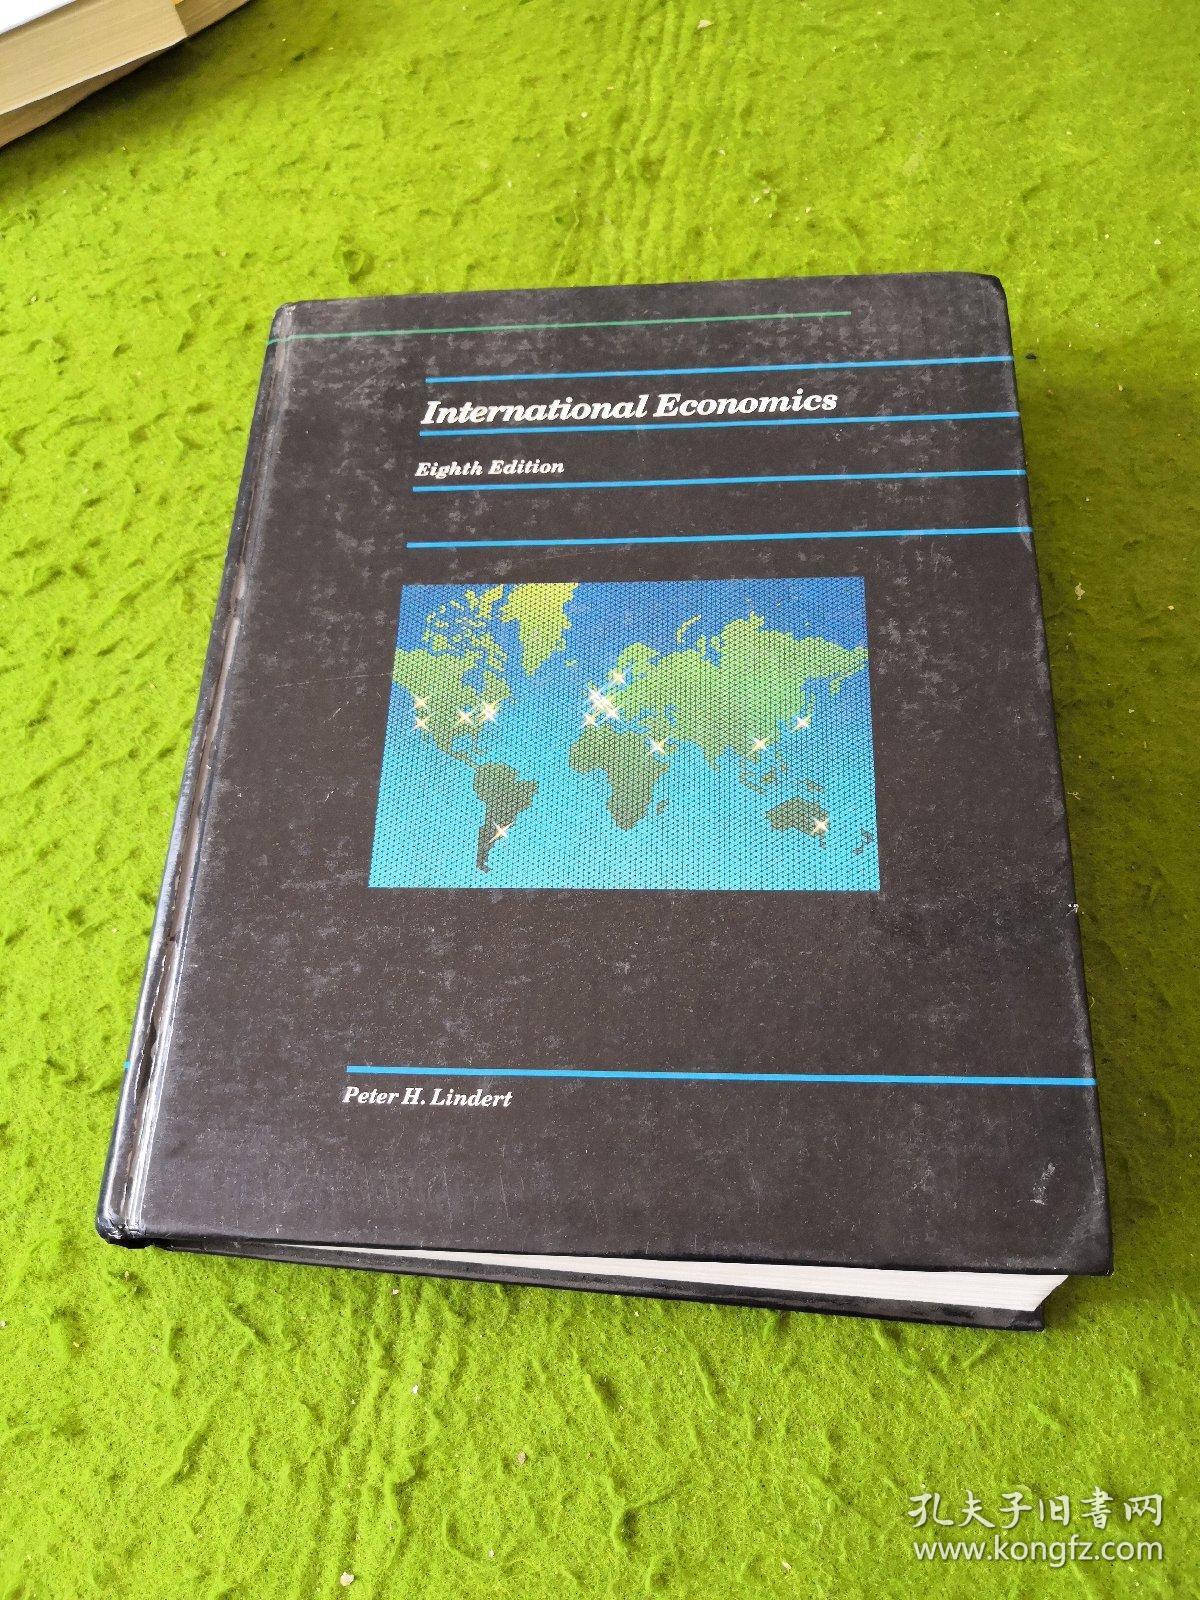 INTERNATIONAL ECONOMICS 国际经济学